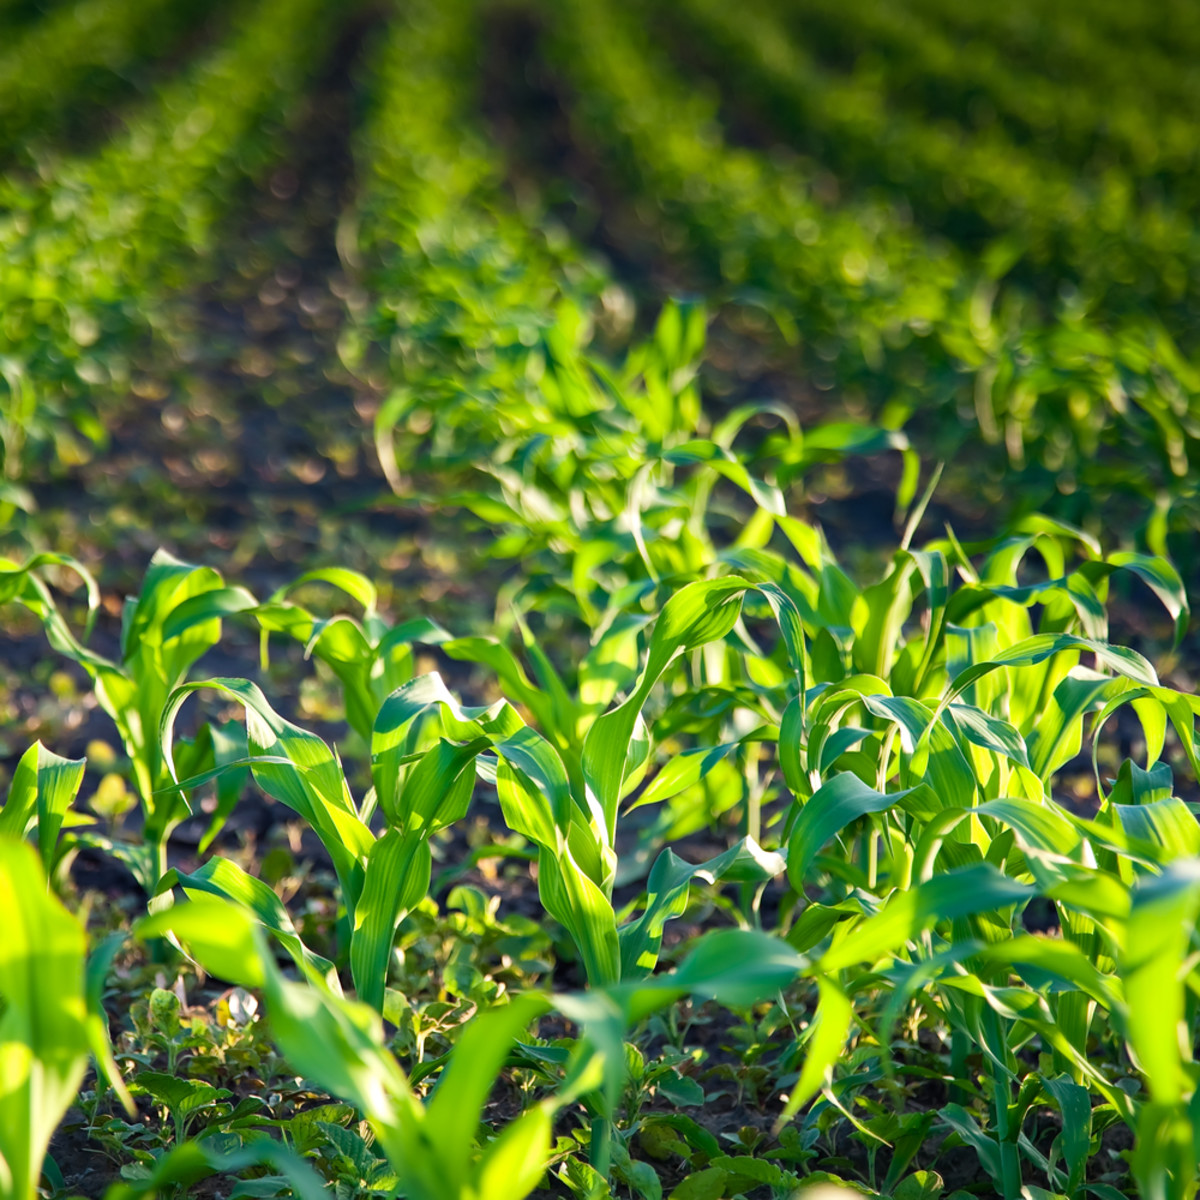 Big Organic Farming Operations Not So Green, Warns Study